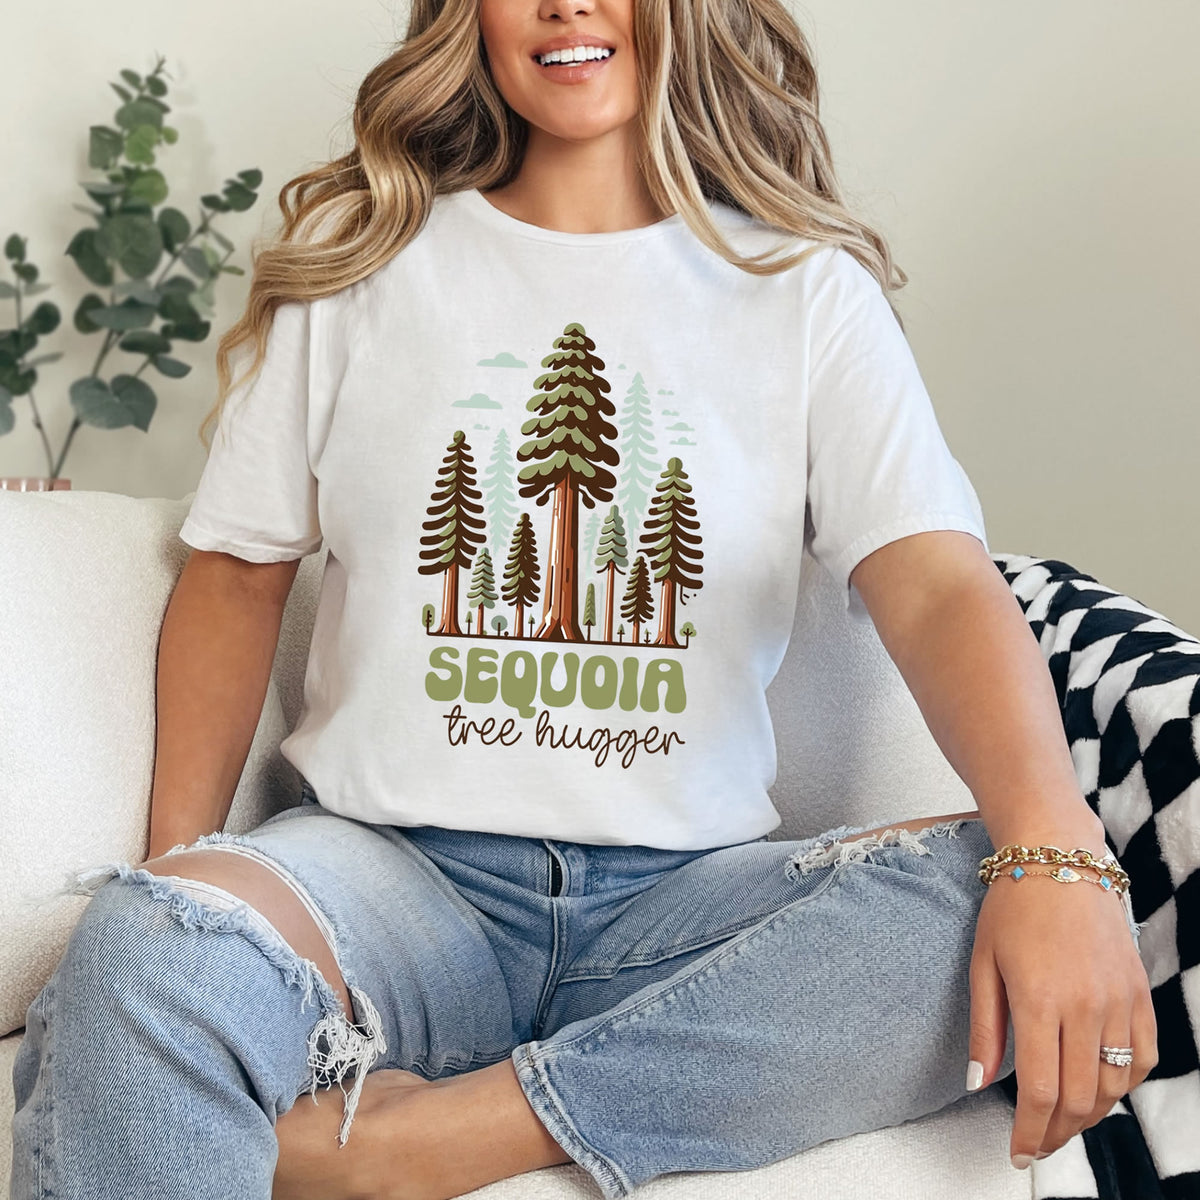 Sequoia National Park Shirt | Sequoia Tree Hugger Shirt | Camping Shirt | Nature Lover Gift | Unisex Soft Style T-shirt